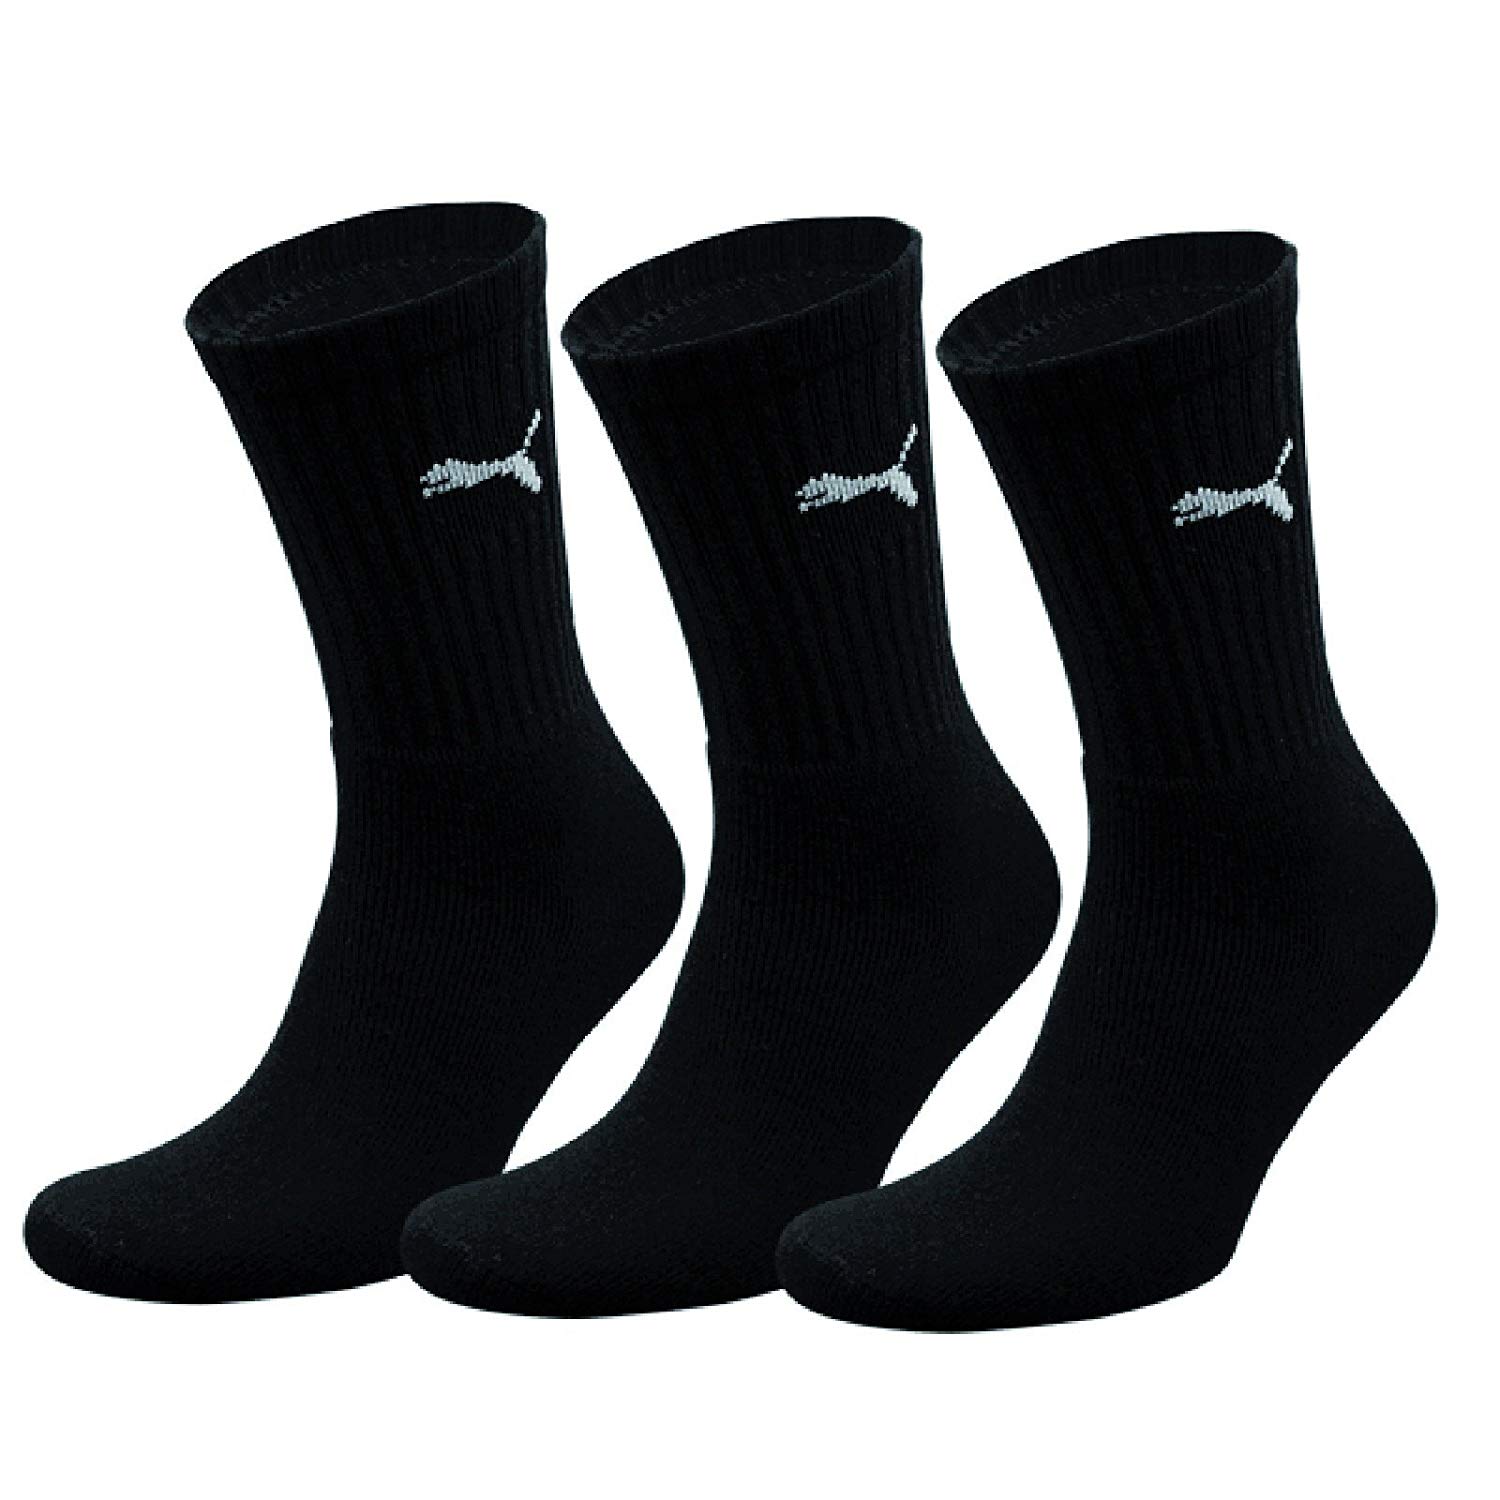 puma socks amazon.com: puma crew socks 3 pair pack/mens socks (7-9 us) (black): sports ZRKELAV